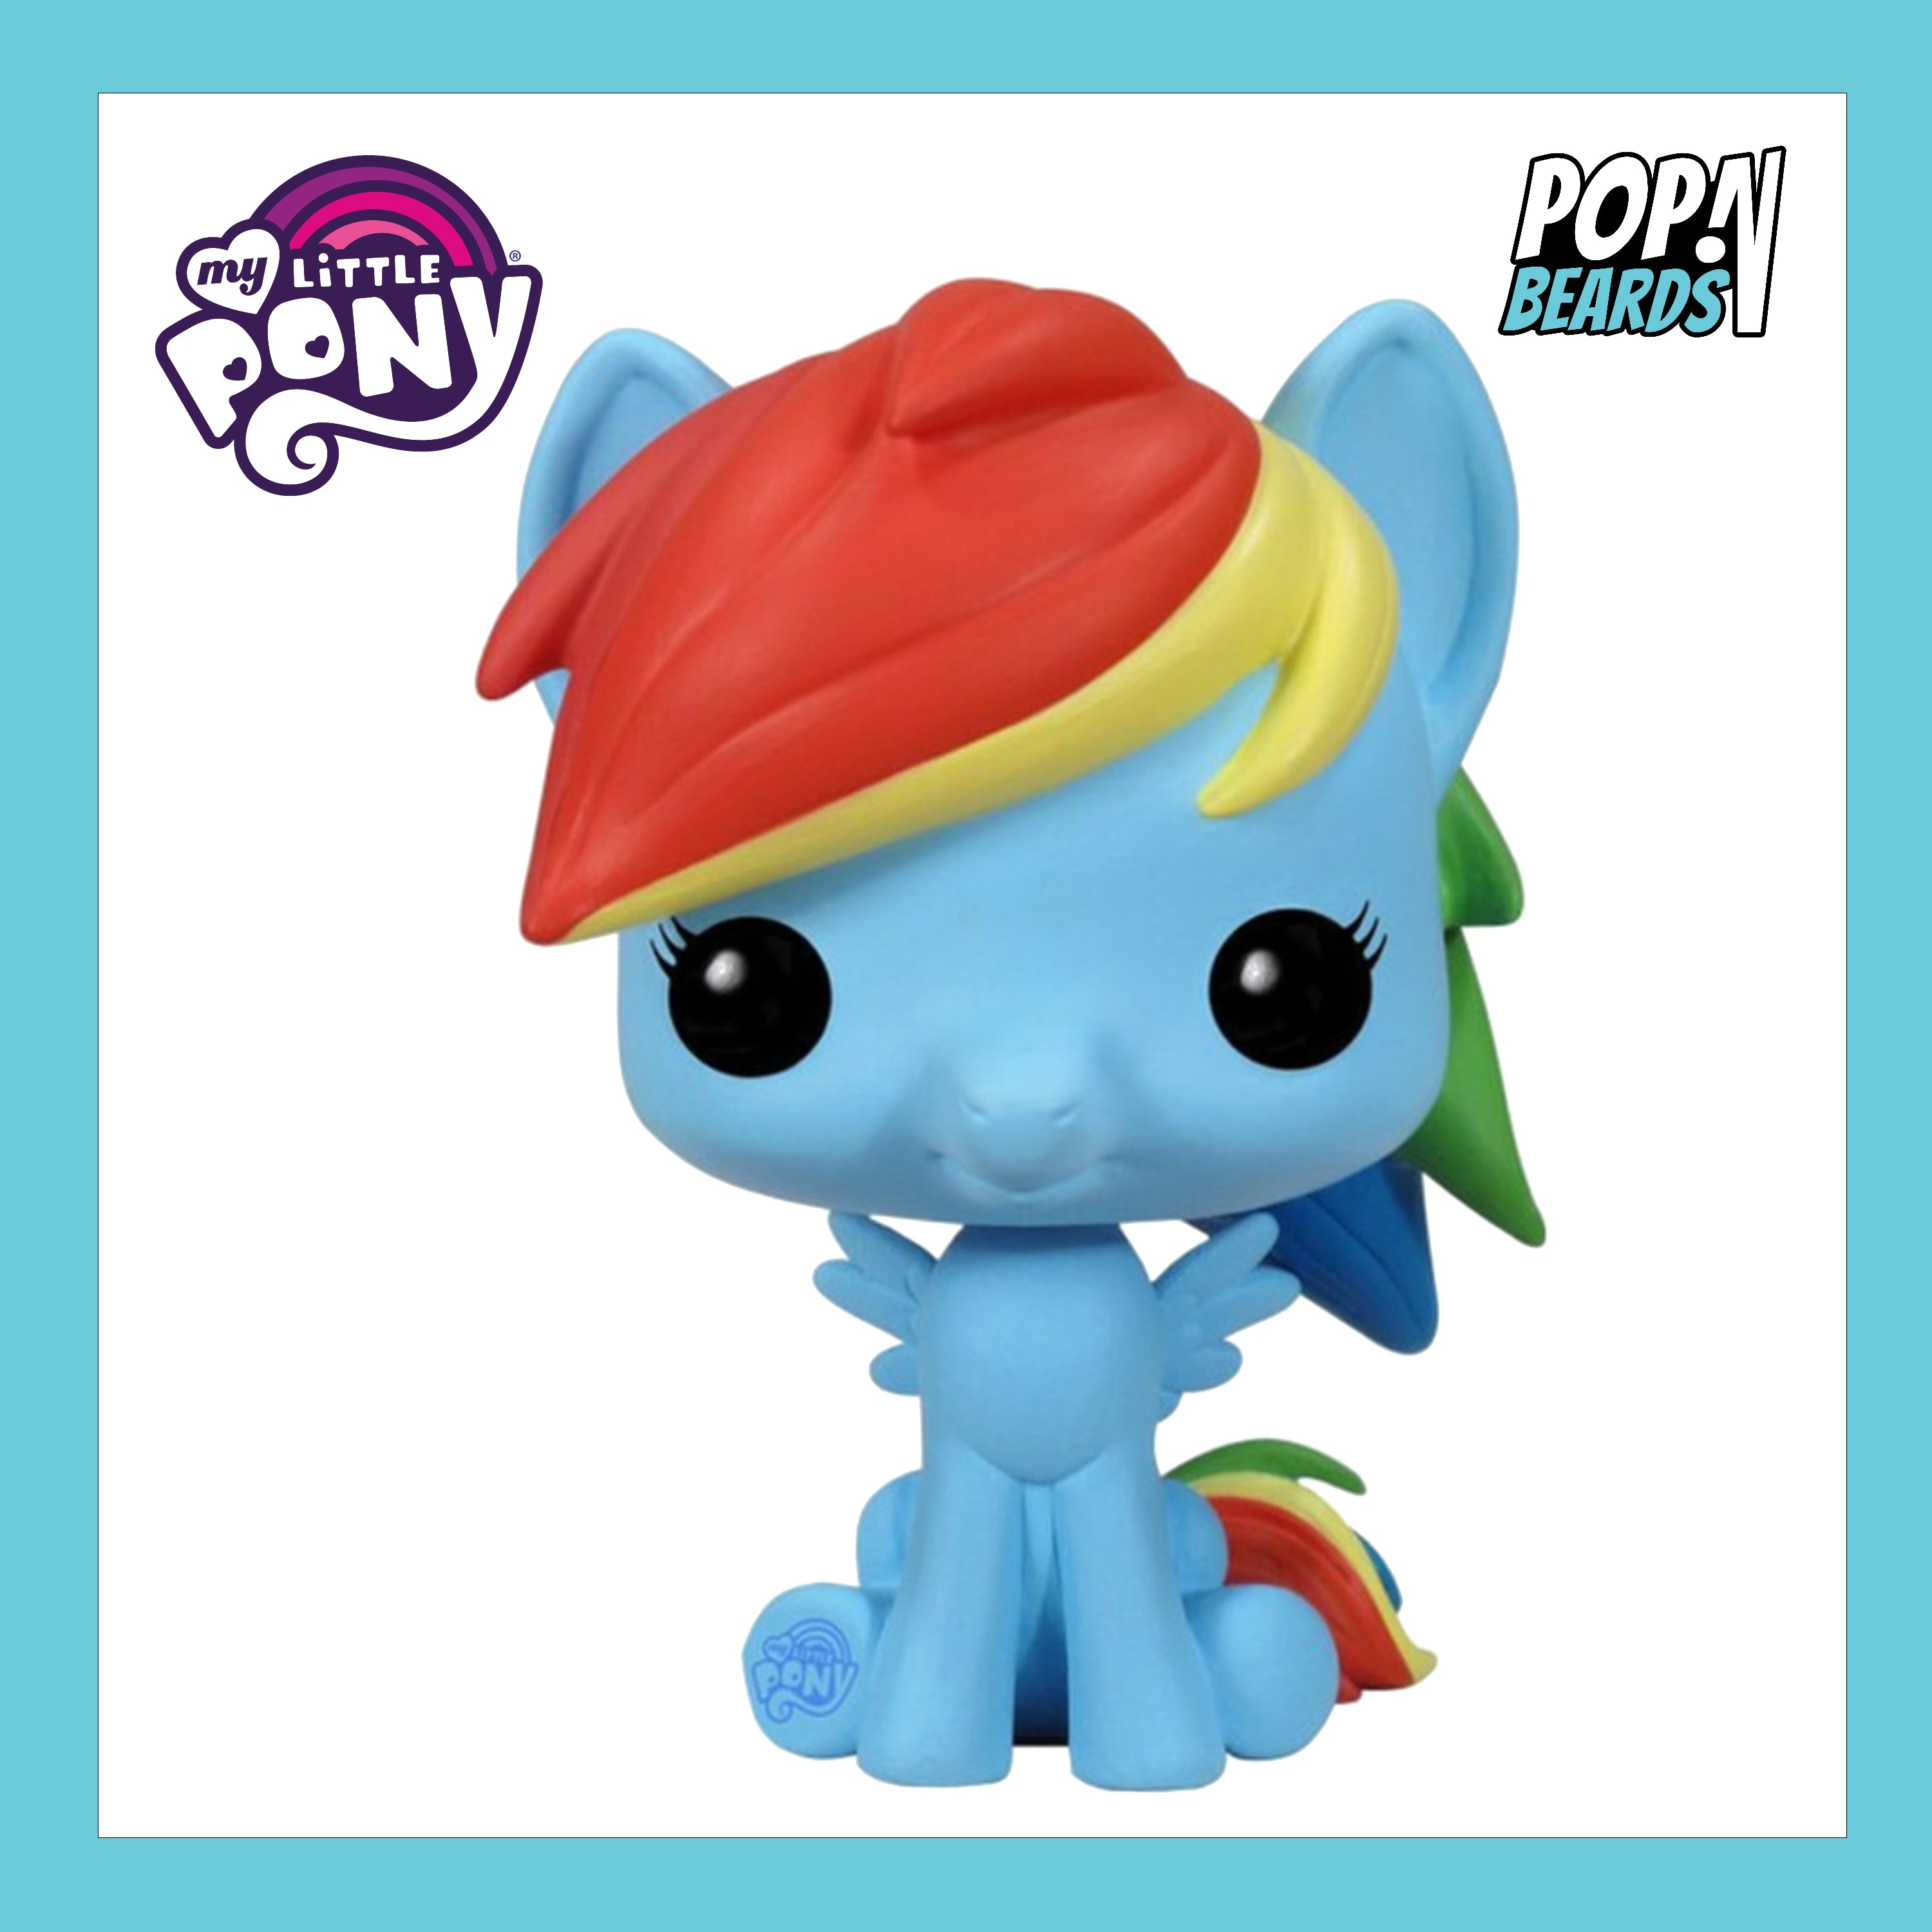 POP! Little Pony: 04 My Little Pony, Rainbow POPnBeards